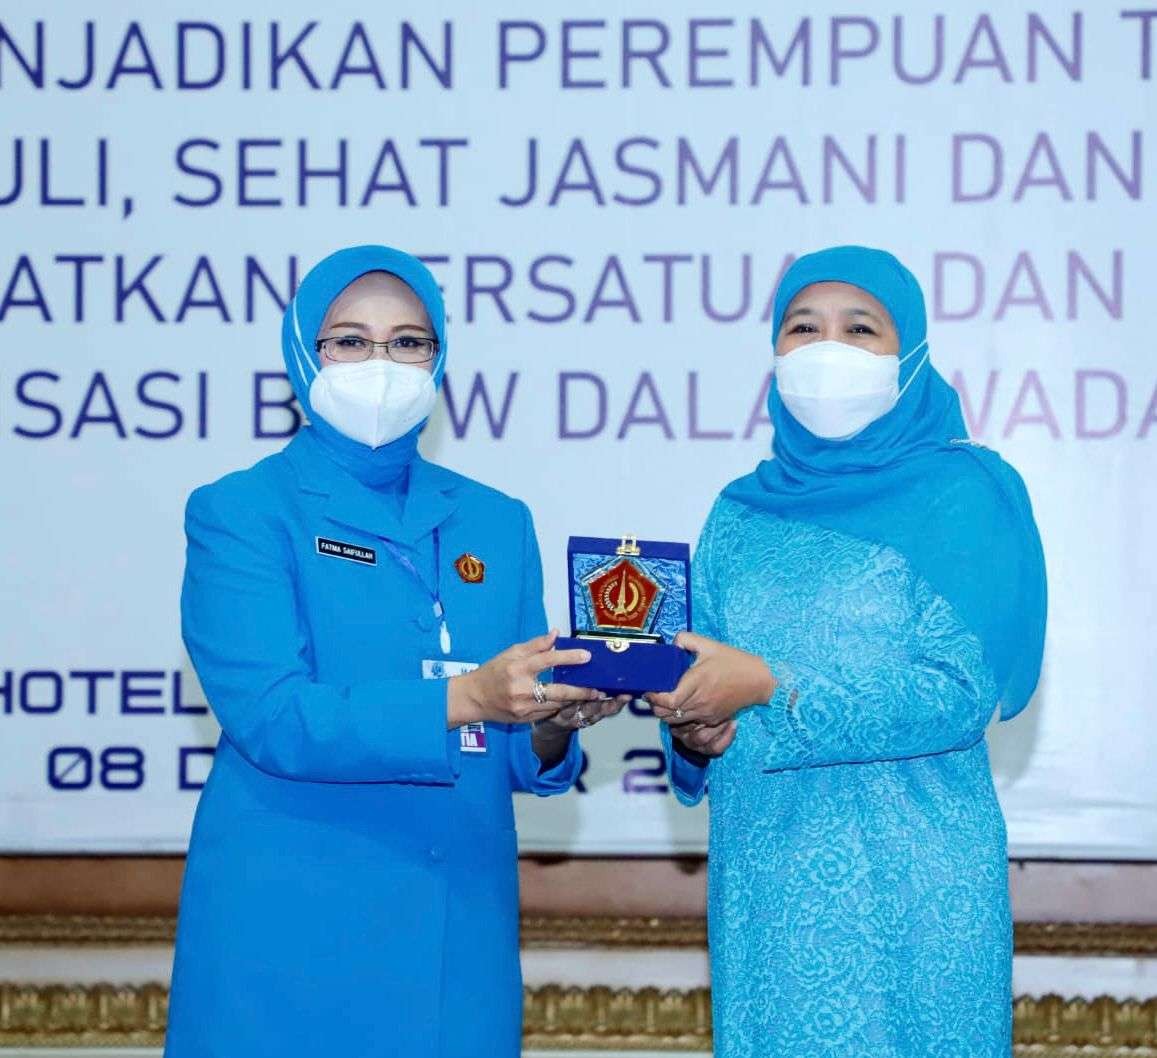 Ketua Umum BKOW Provinsi Jatim Fatma Saifullah Yusuf dan Gubernur Jatim Khofifah Indar Parawansa. (Foto: dok. BKOW Provinsi Jatim)